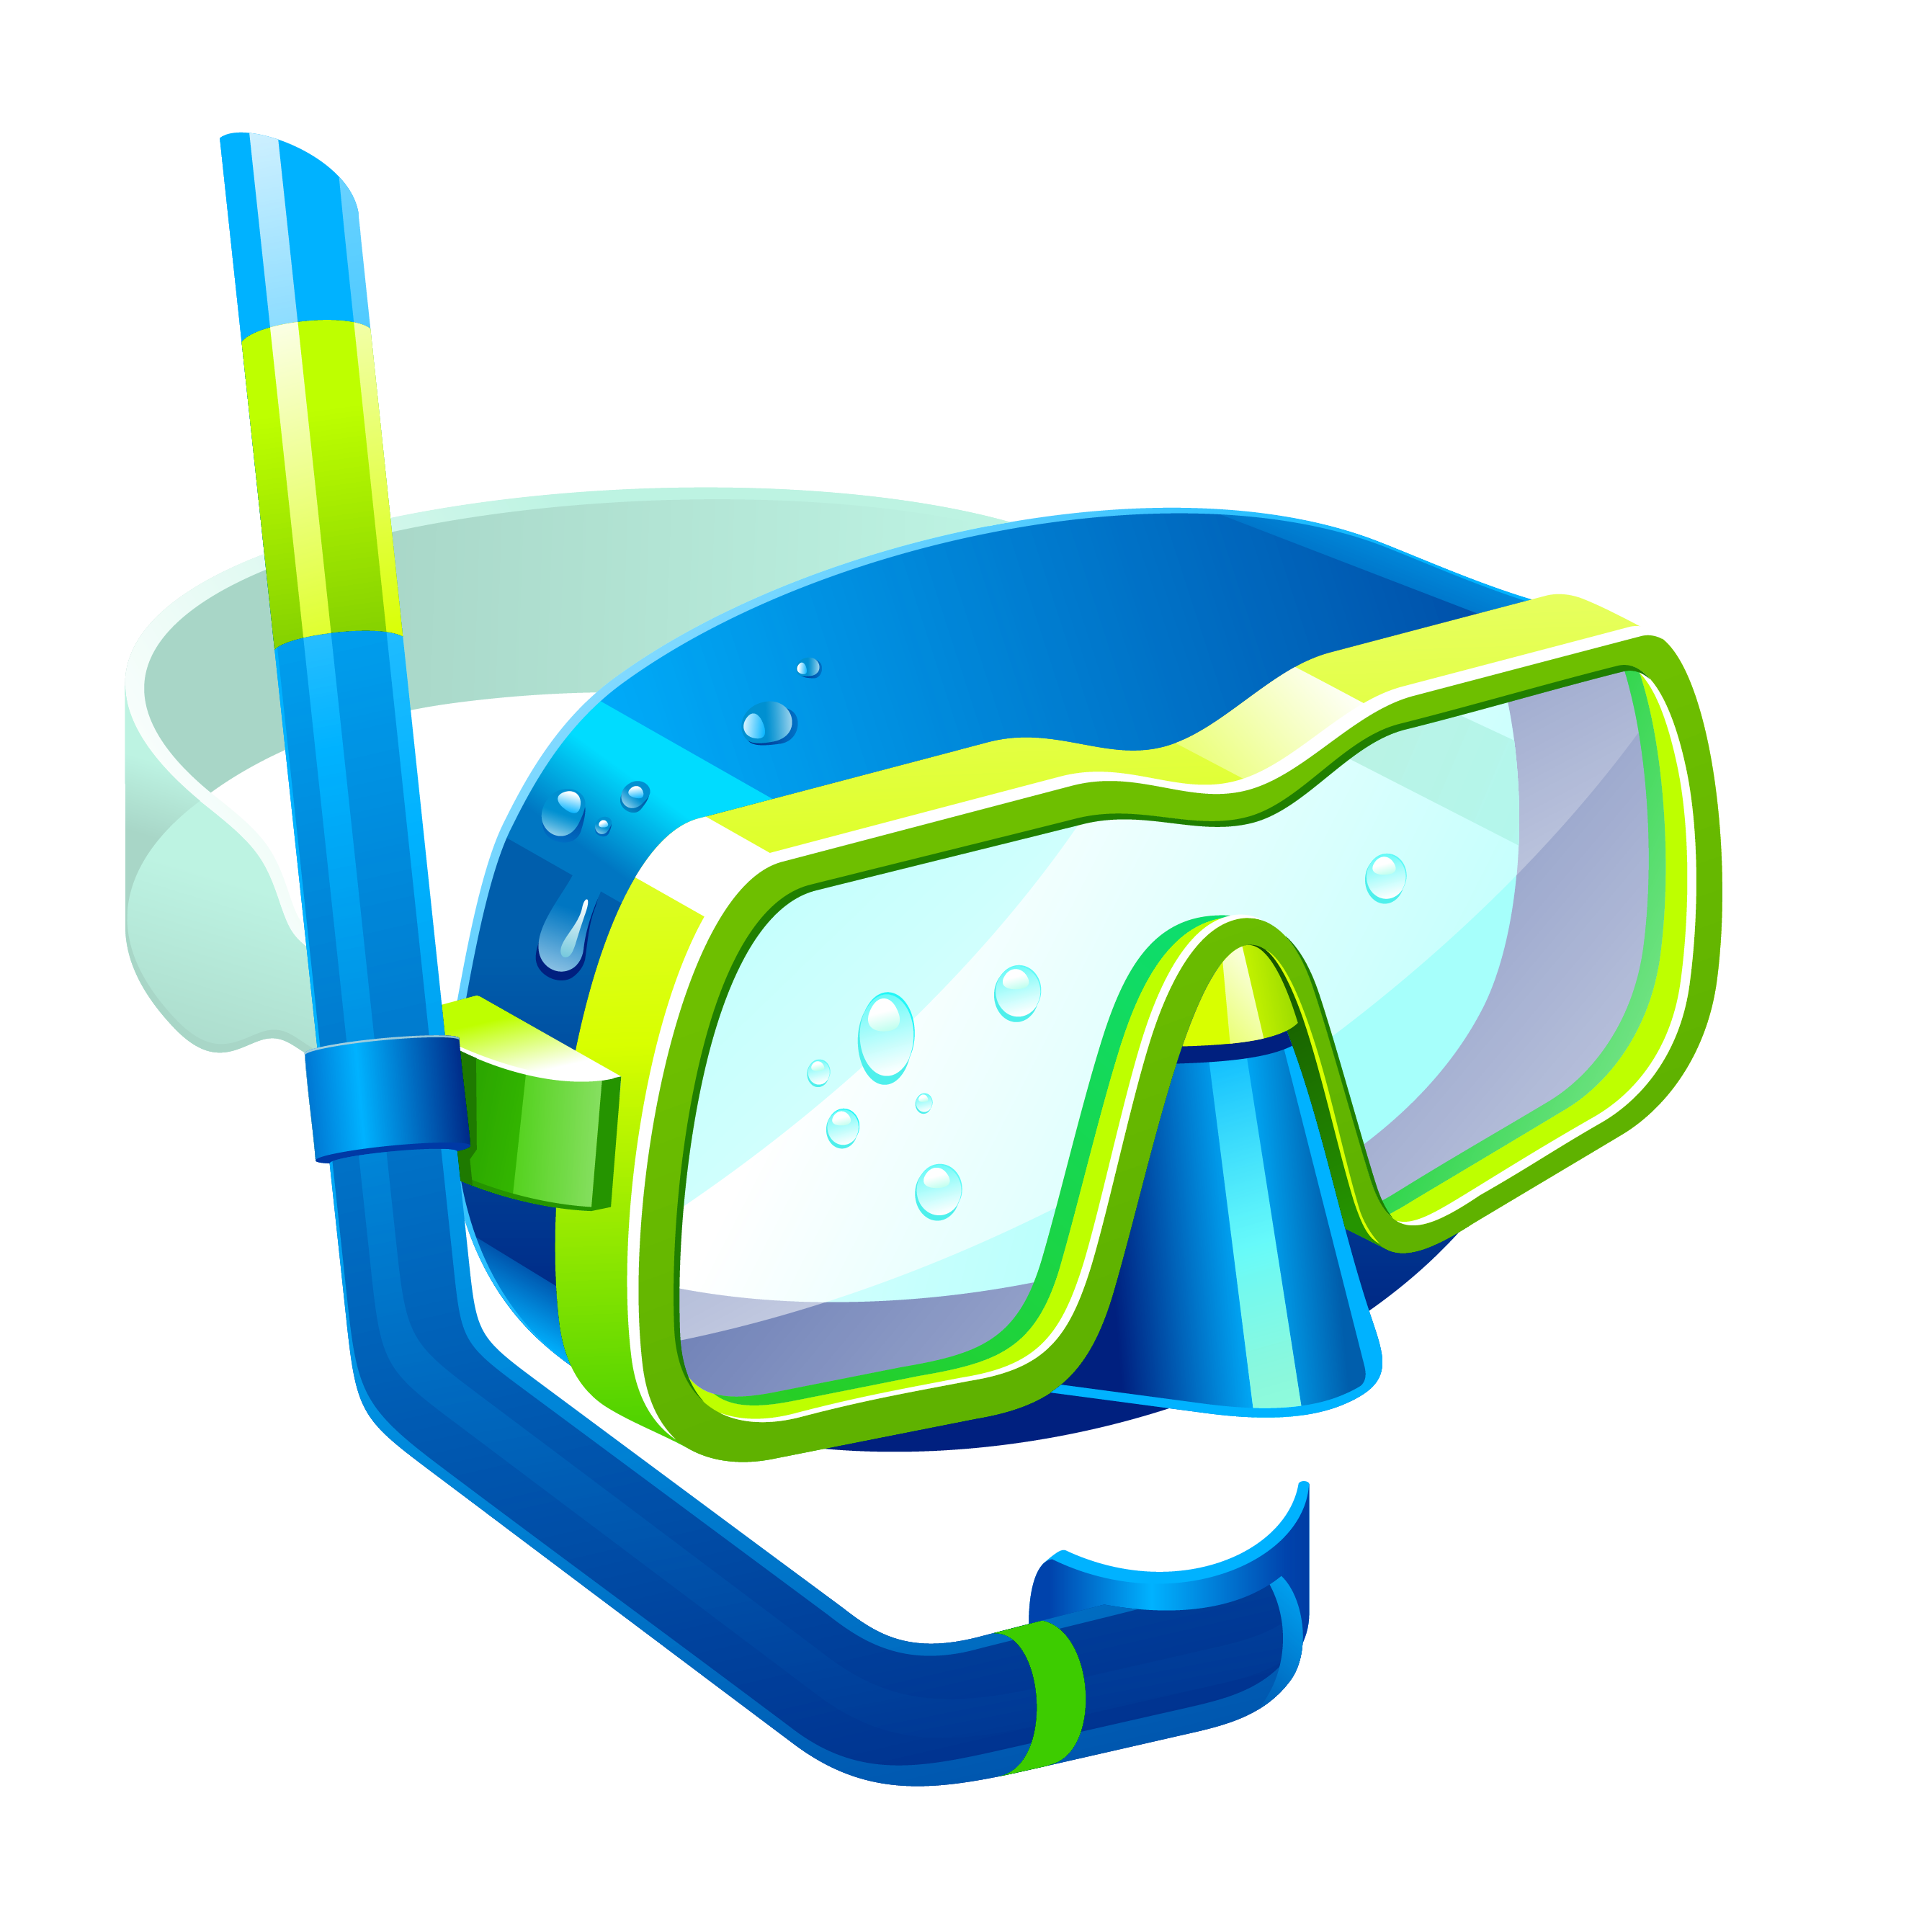 Transparent Blue Snorkel Mask PNG Clipart | Gallery ...